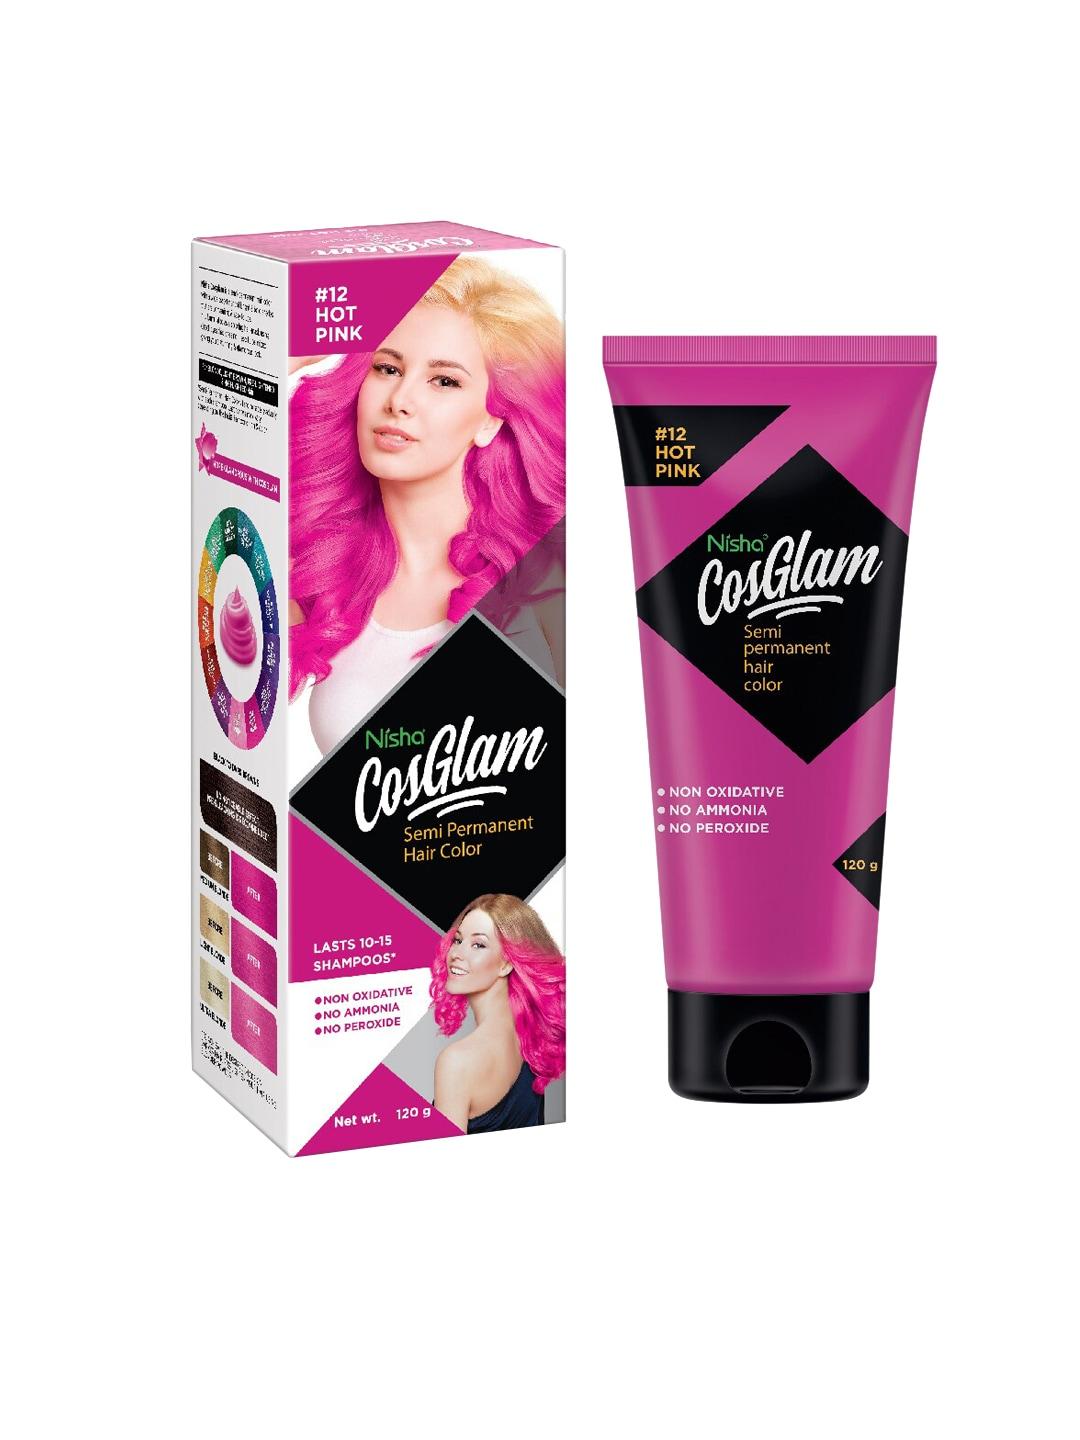 nisha cosglam semi permanent hair color 120 g - hot pink 12